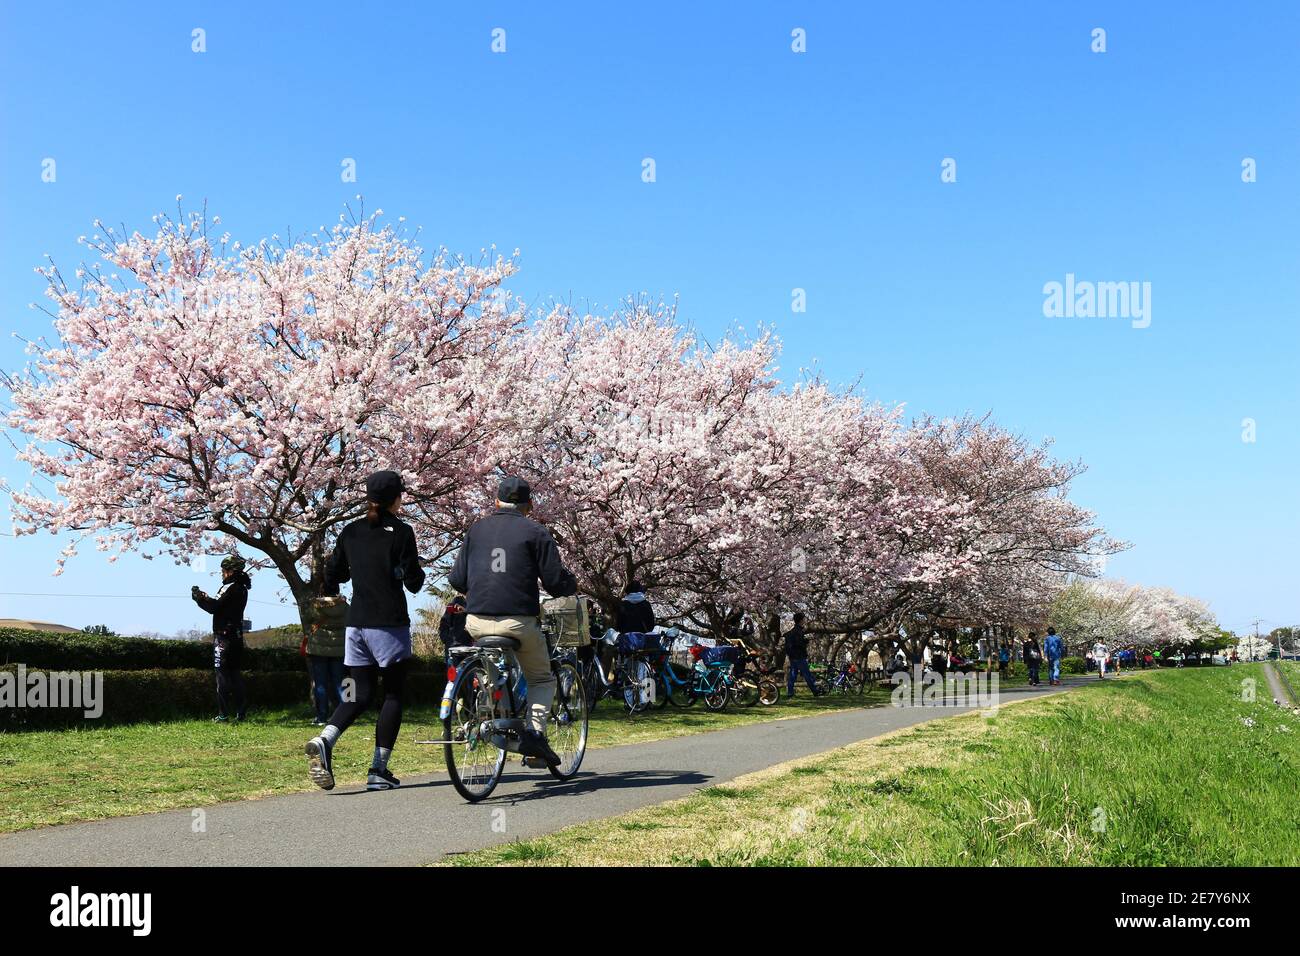 Japanese cherry blossom viewing scenery Stock Photo